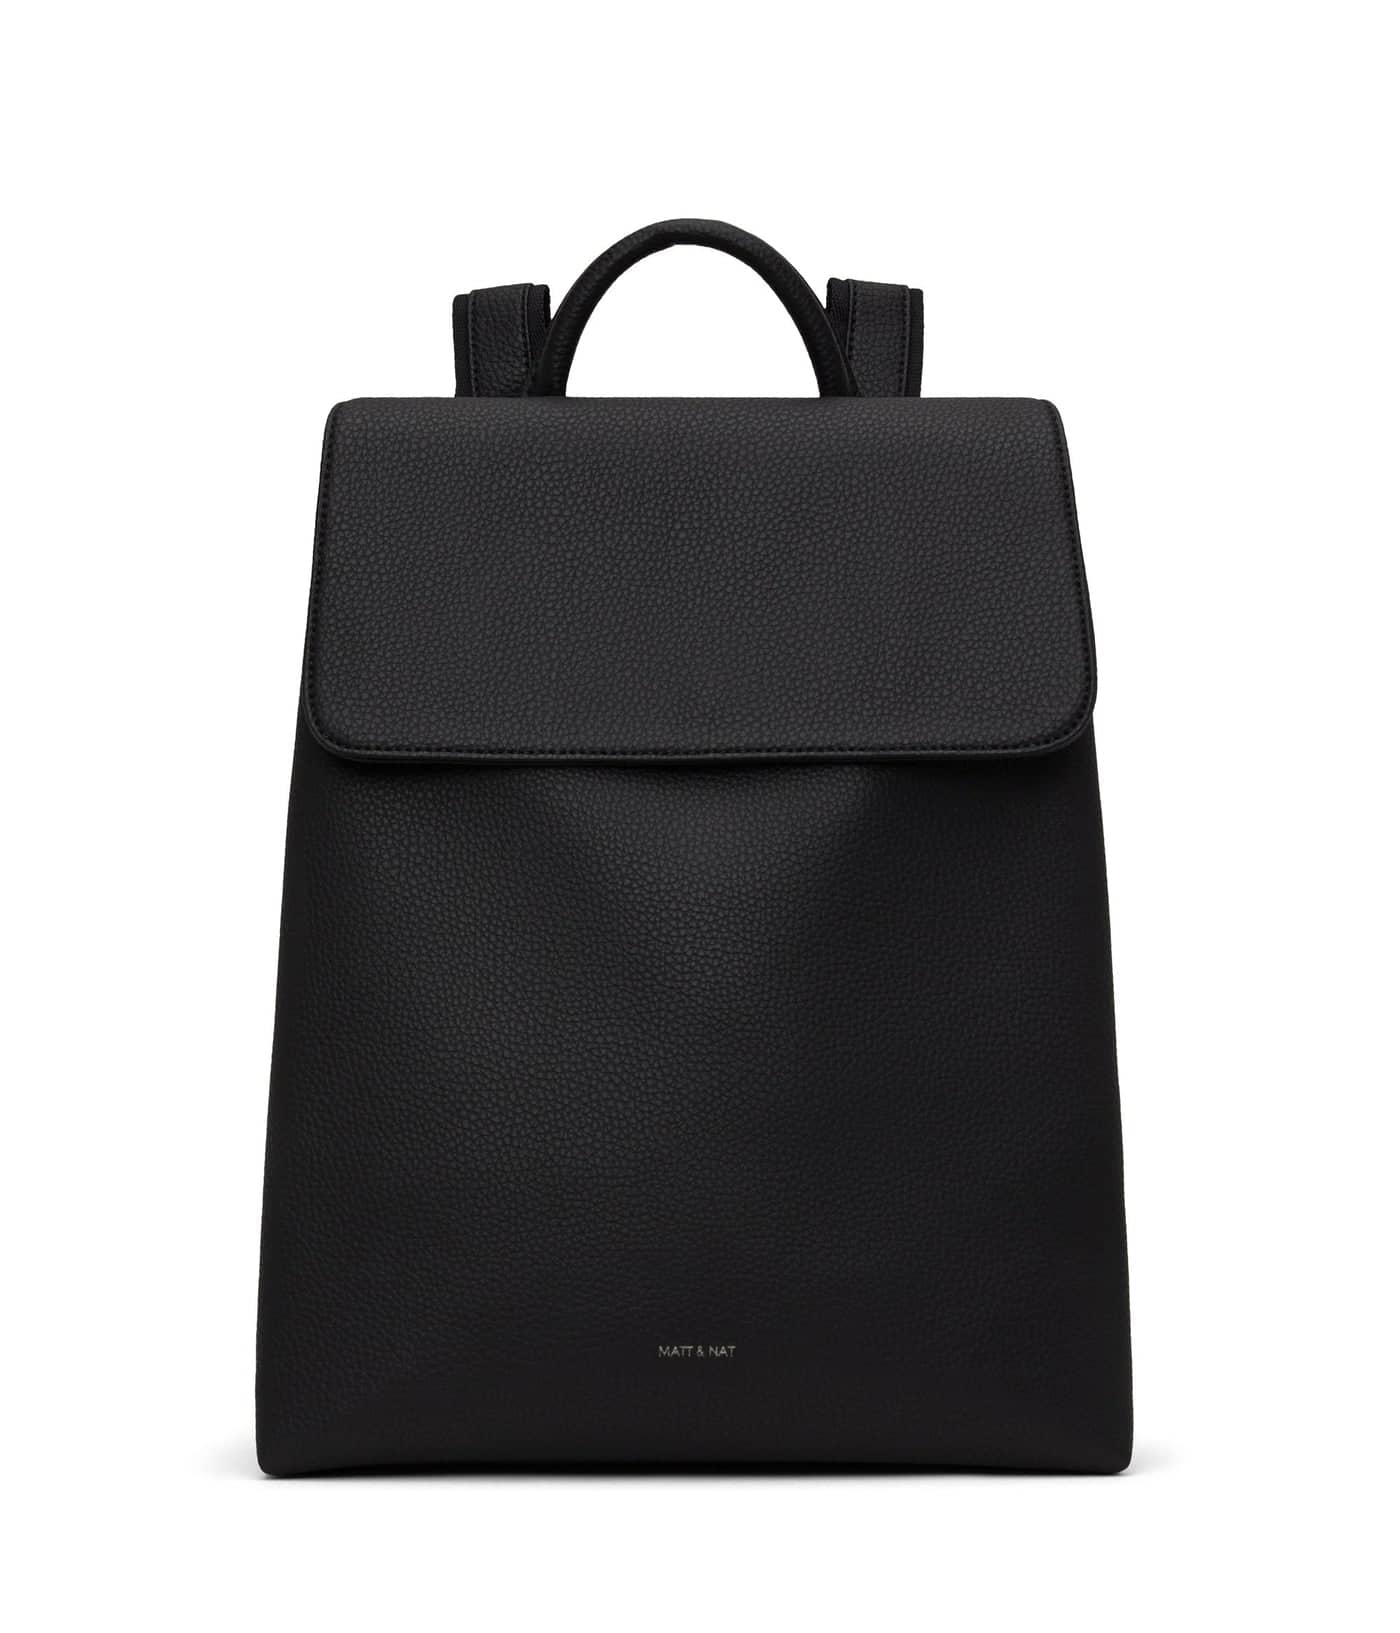 Black matt and nat backpack 15 laptop 